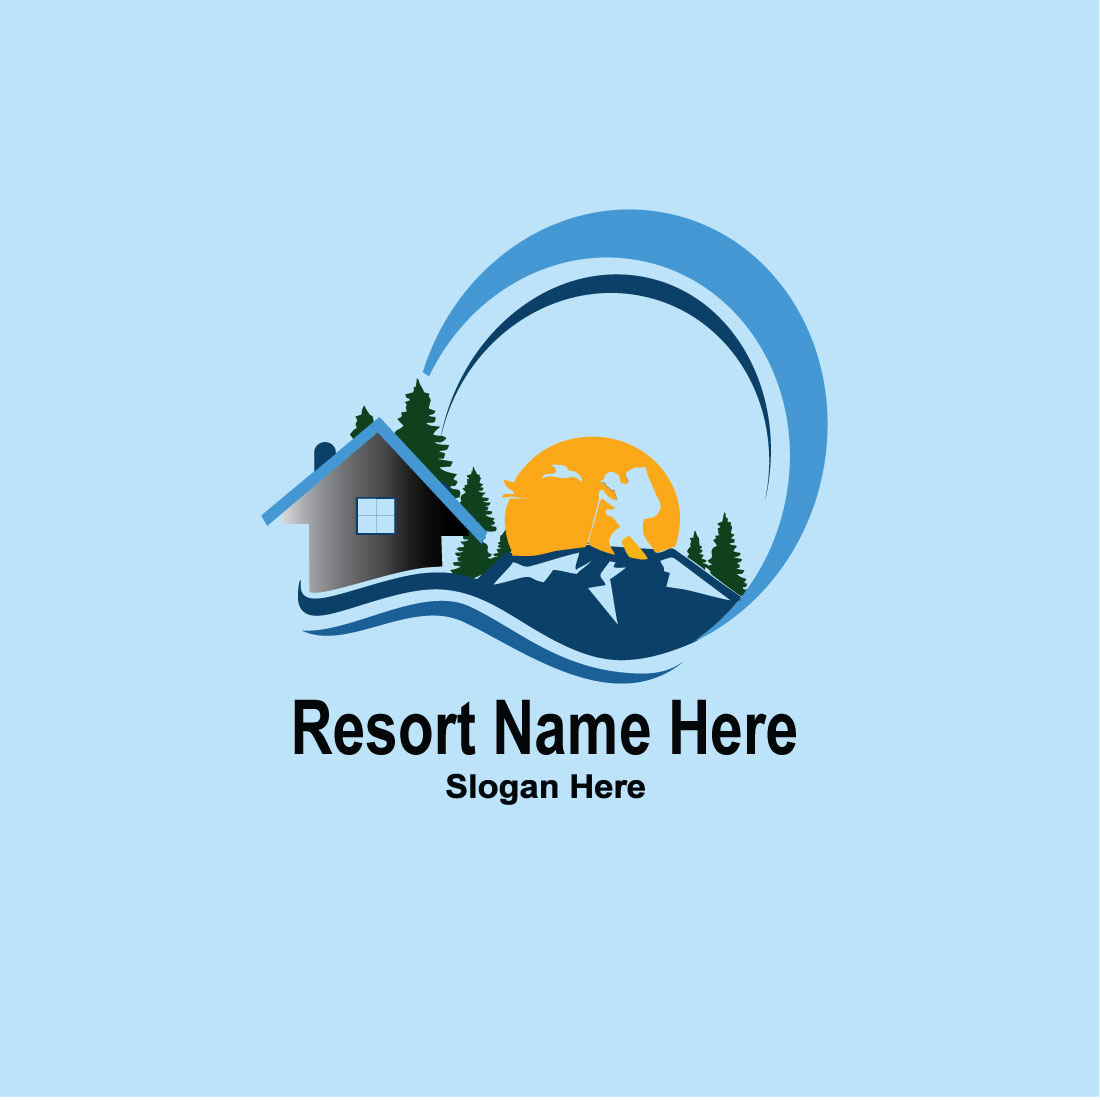 resort customize logo3 748